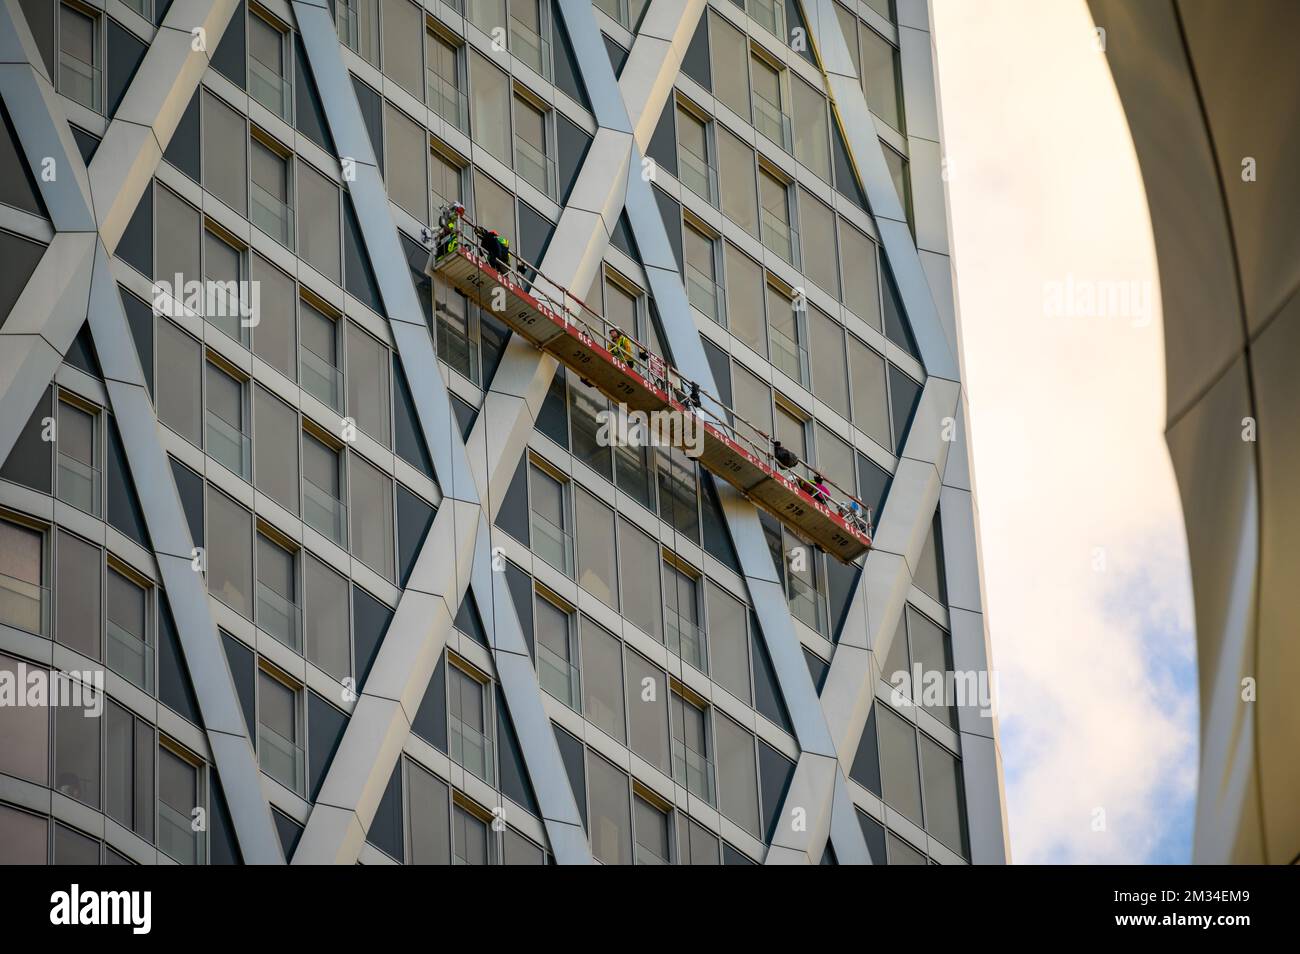 LONDON - November 4, 2020: Men work from suspended platform on side of skyscraper in London Docklands Stock Photo